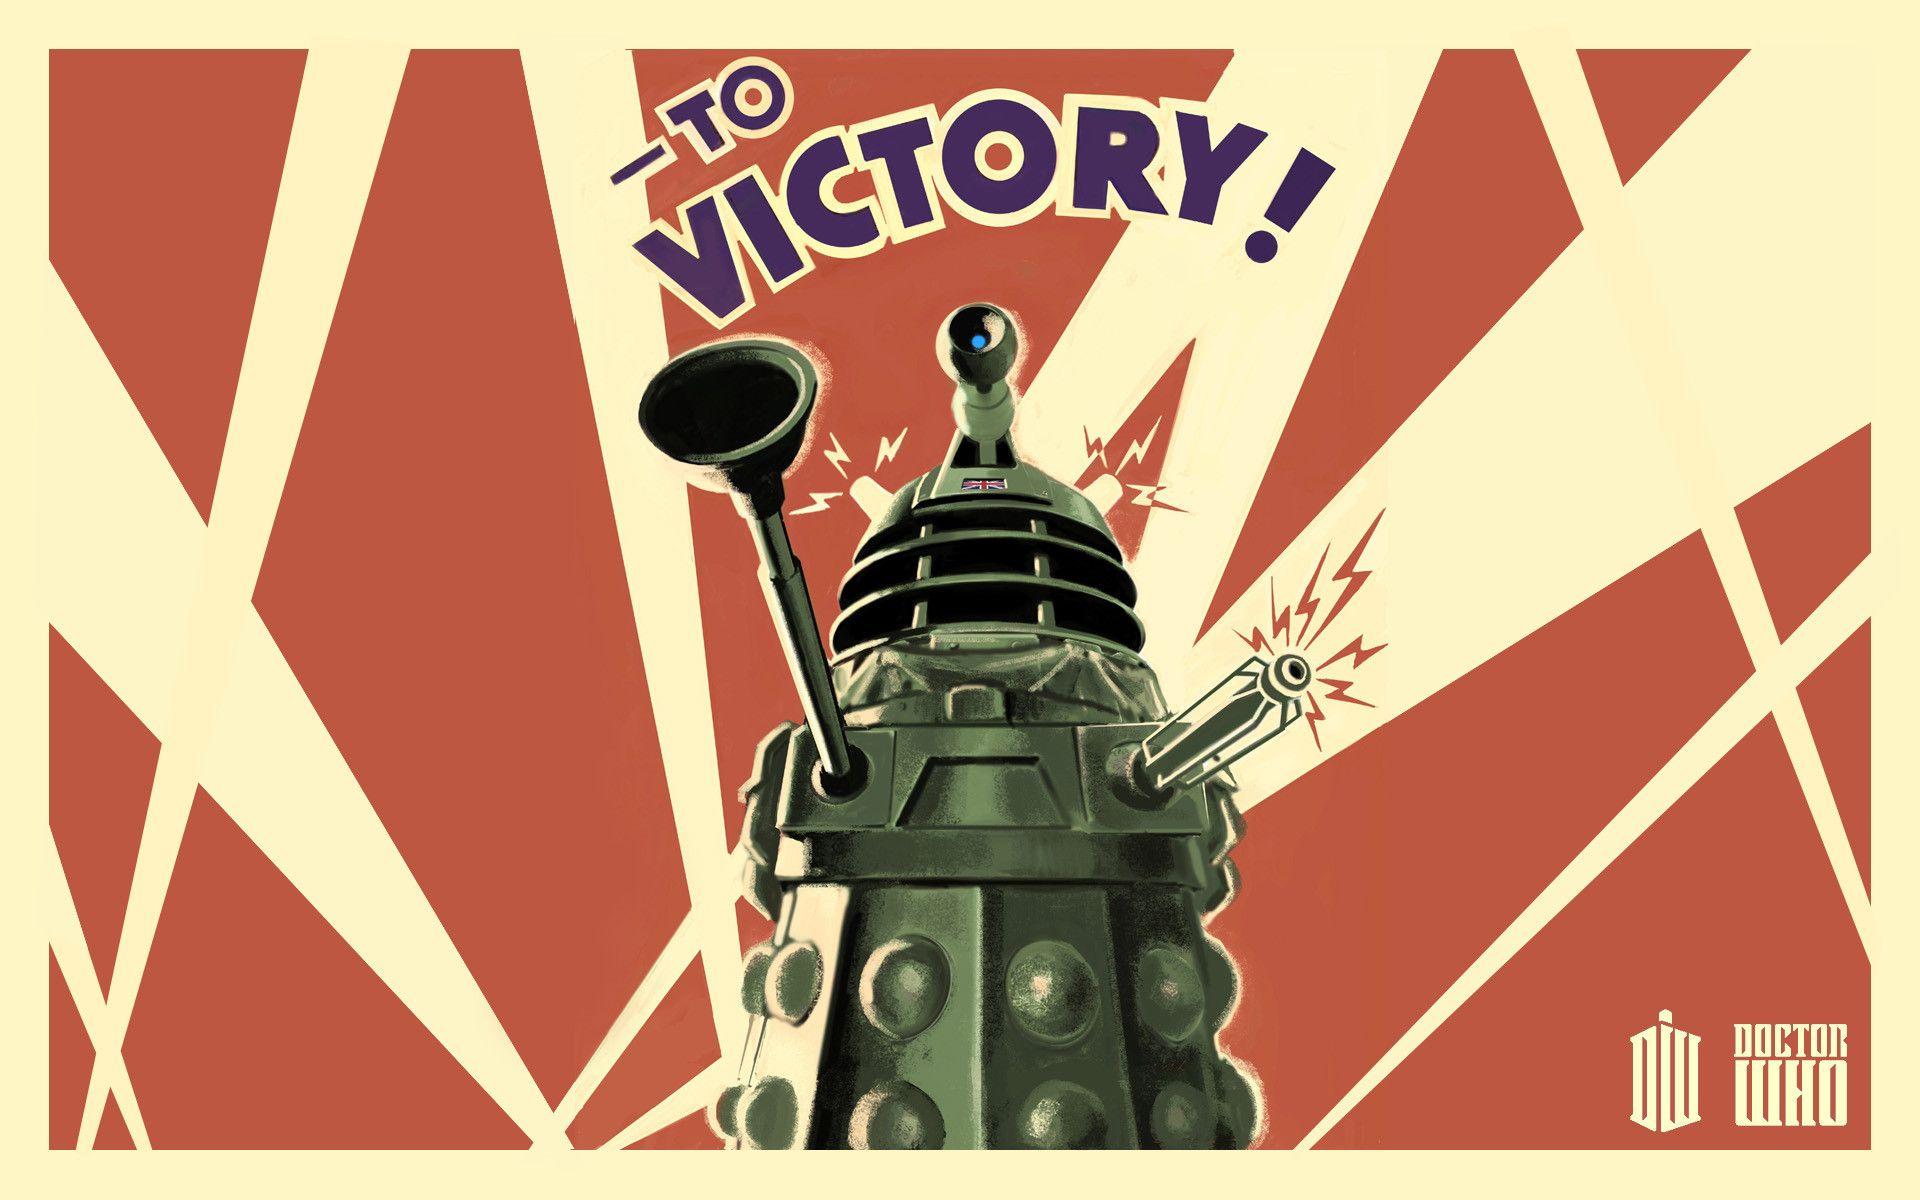 Dalek “To Victory” Wallpaper. General